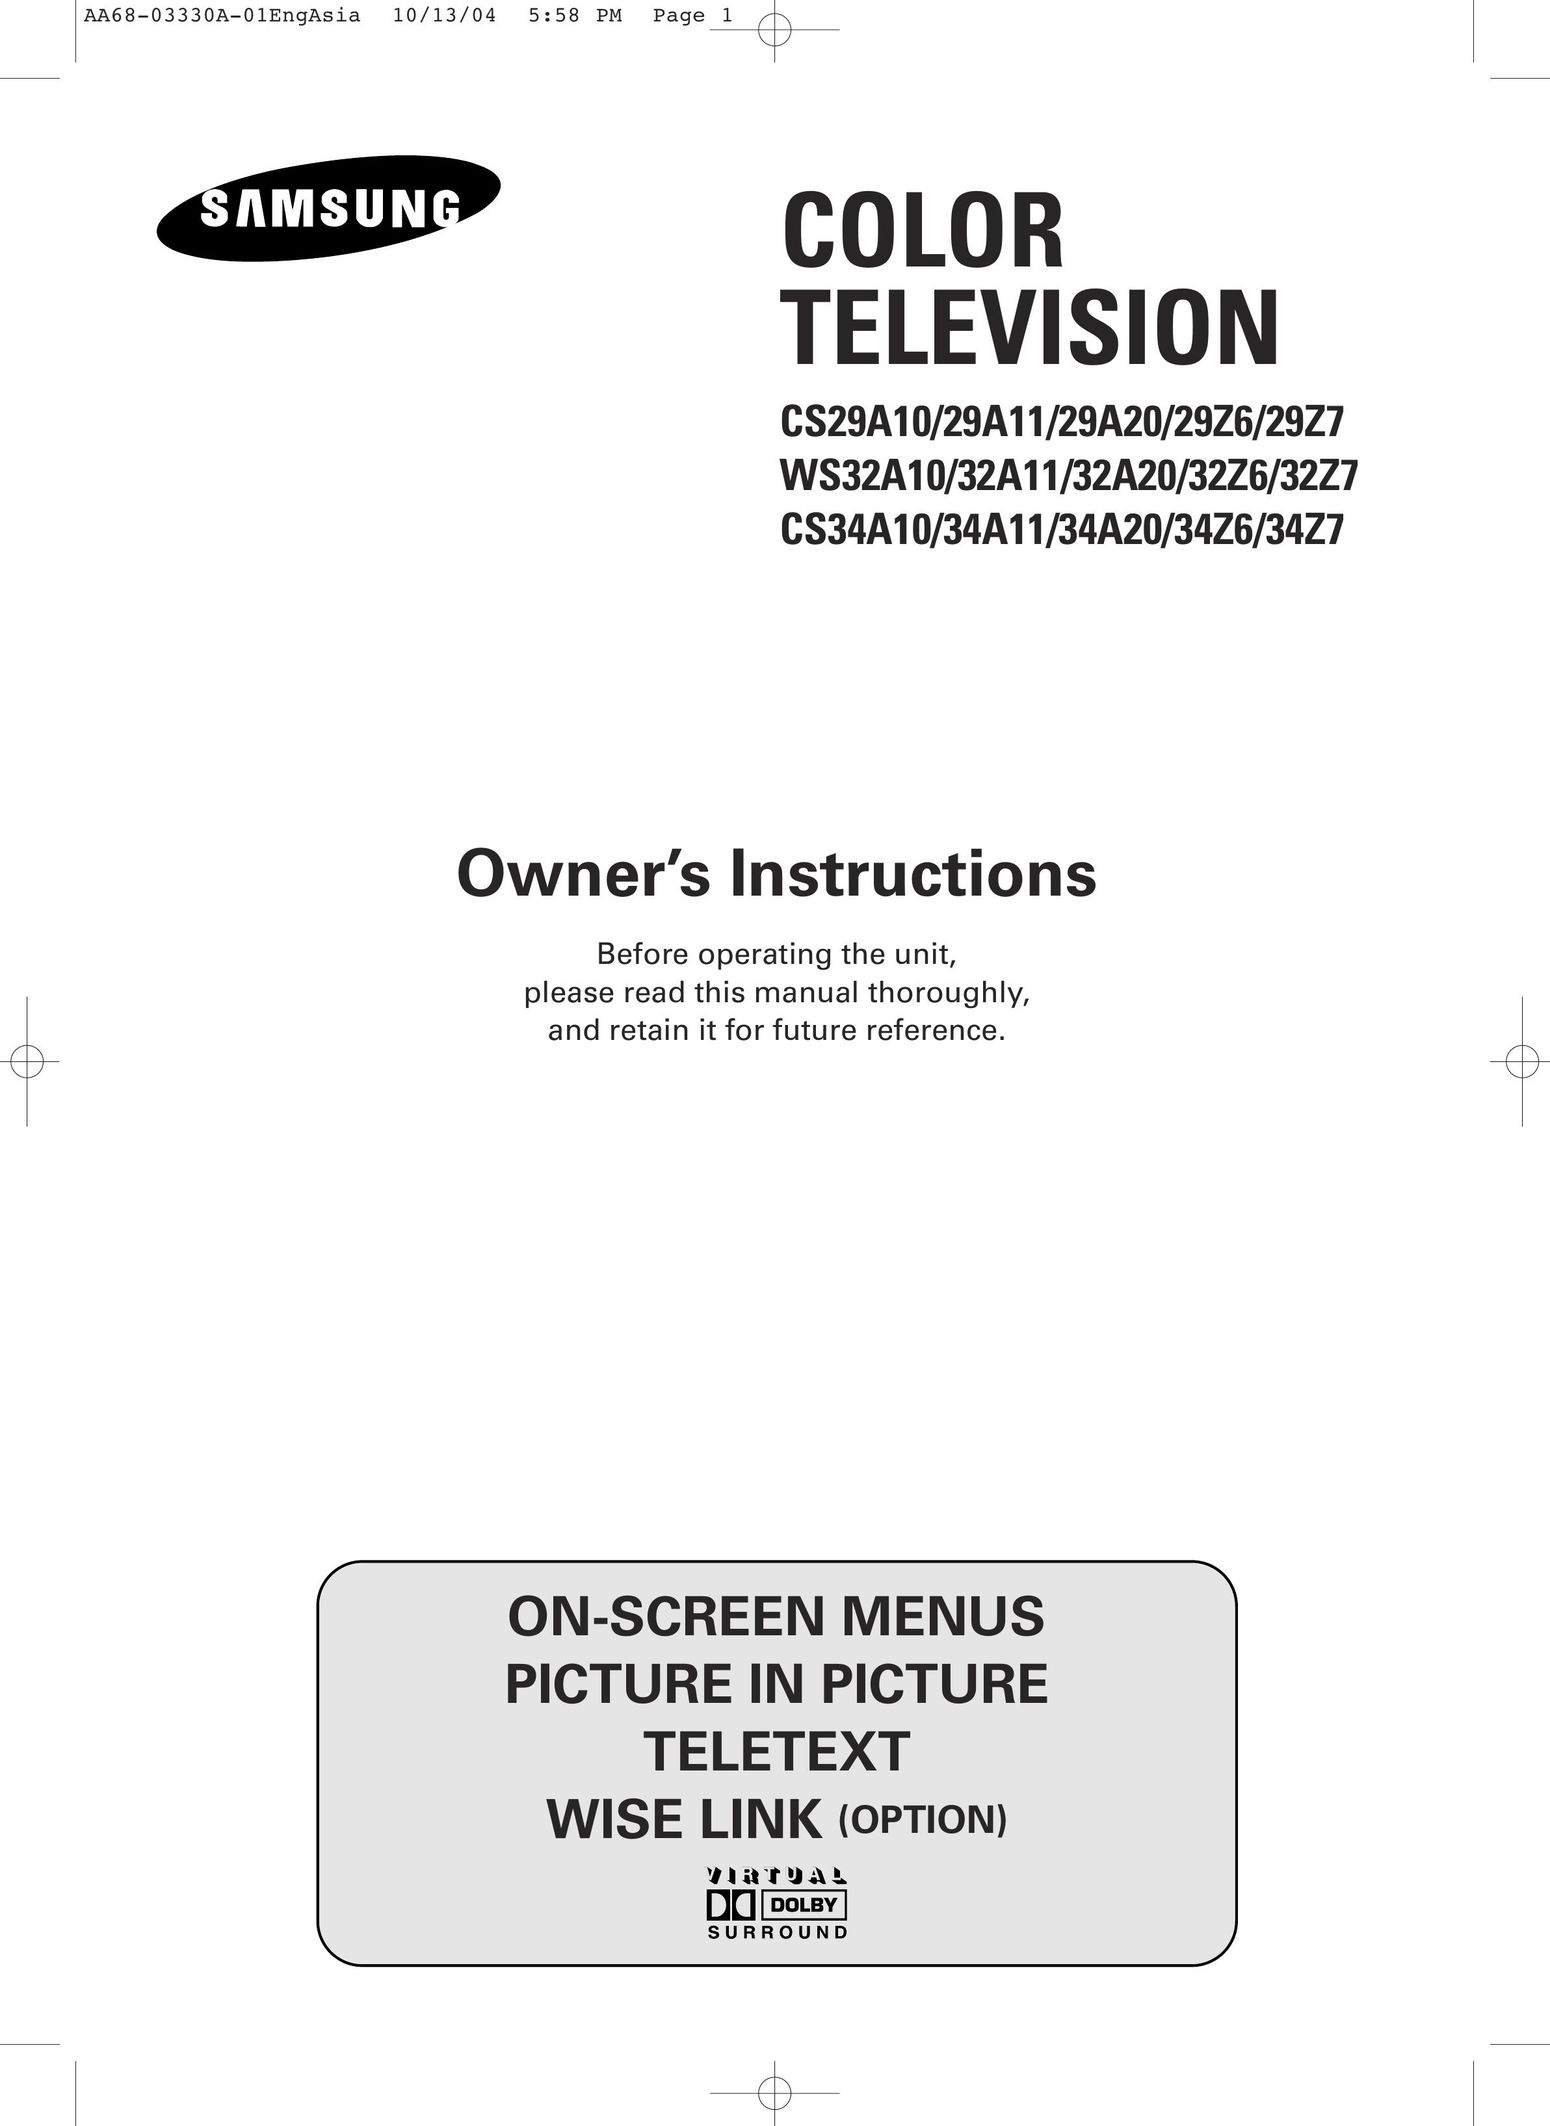 Samsung 32A20 CRT Television User Manual